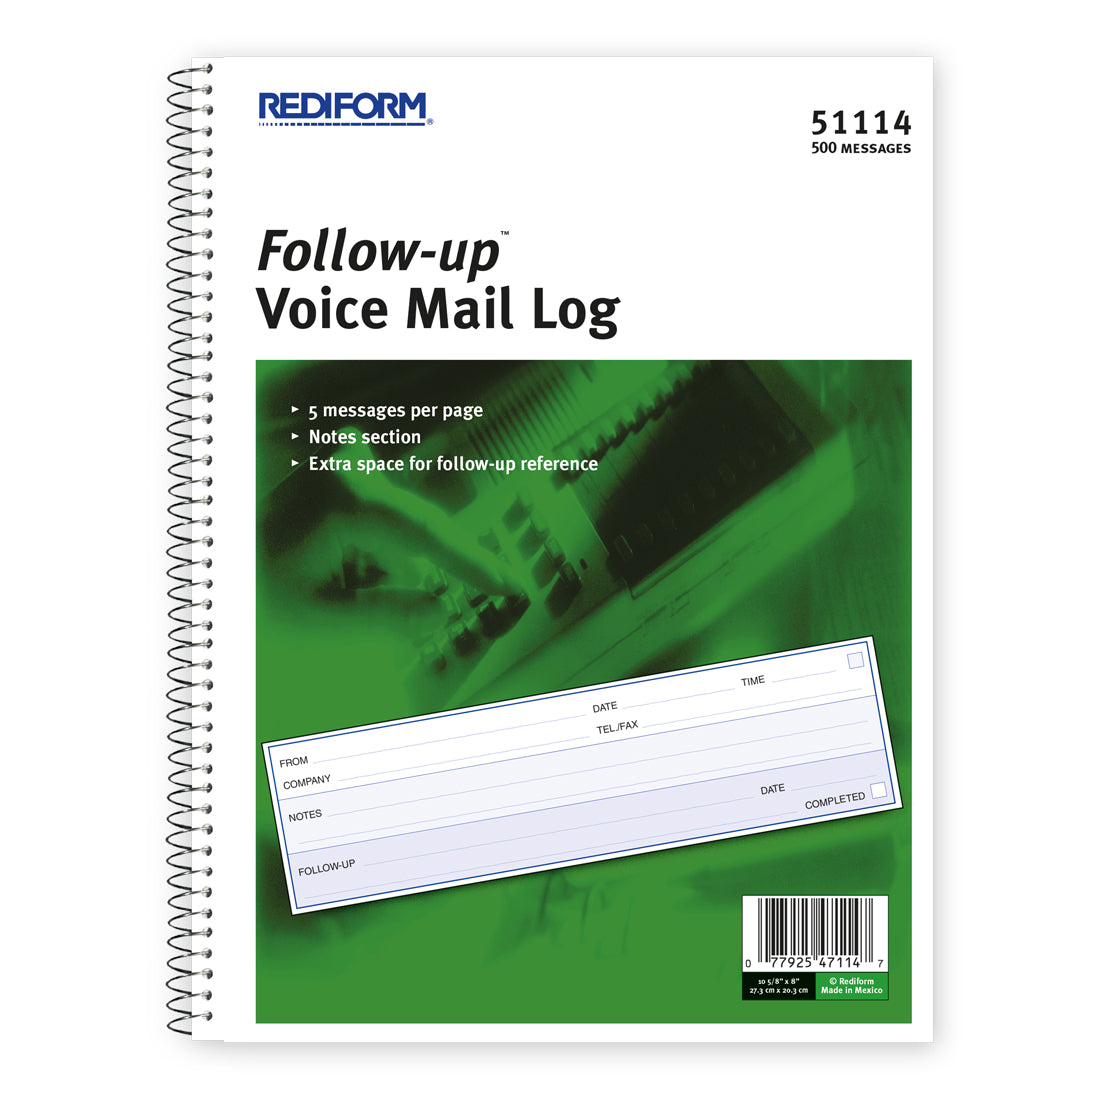 Follow-up Voice Mail Log